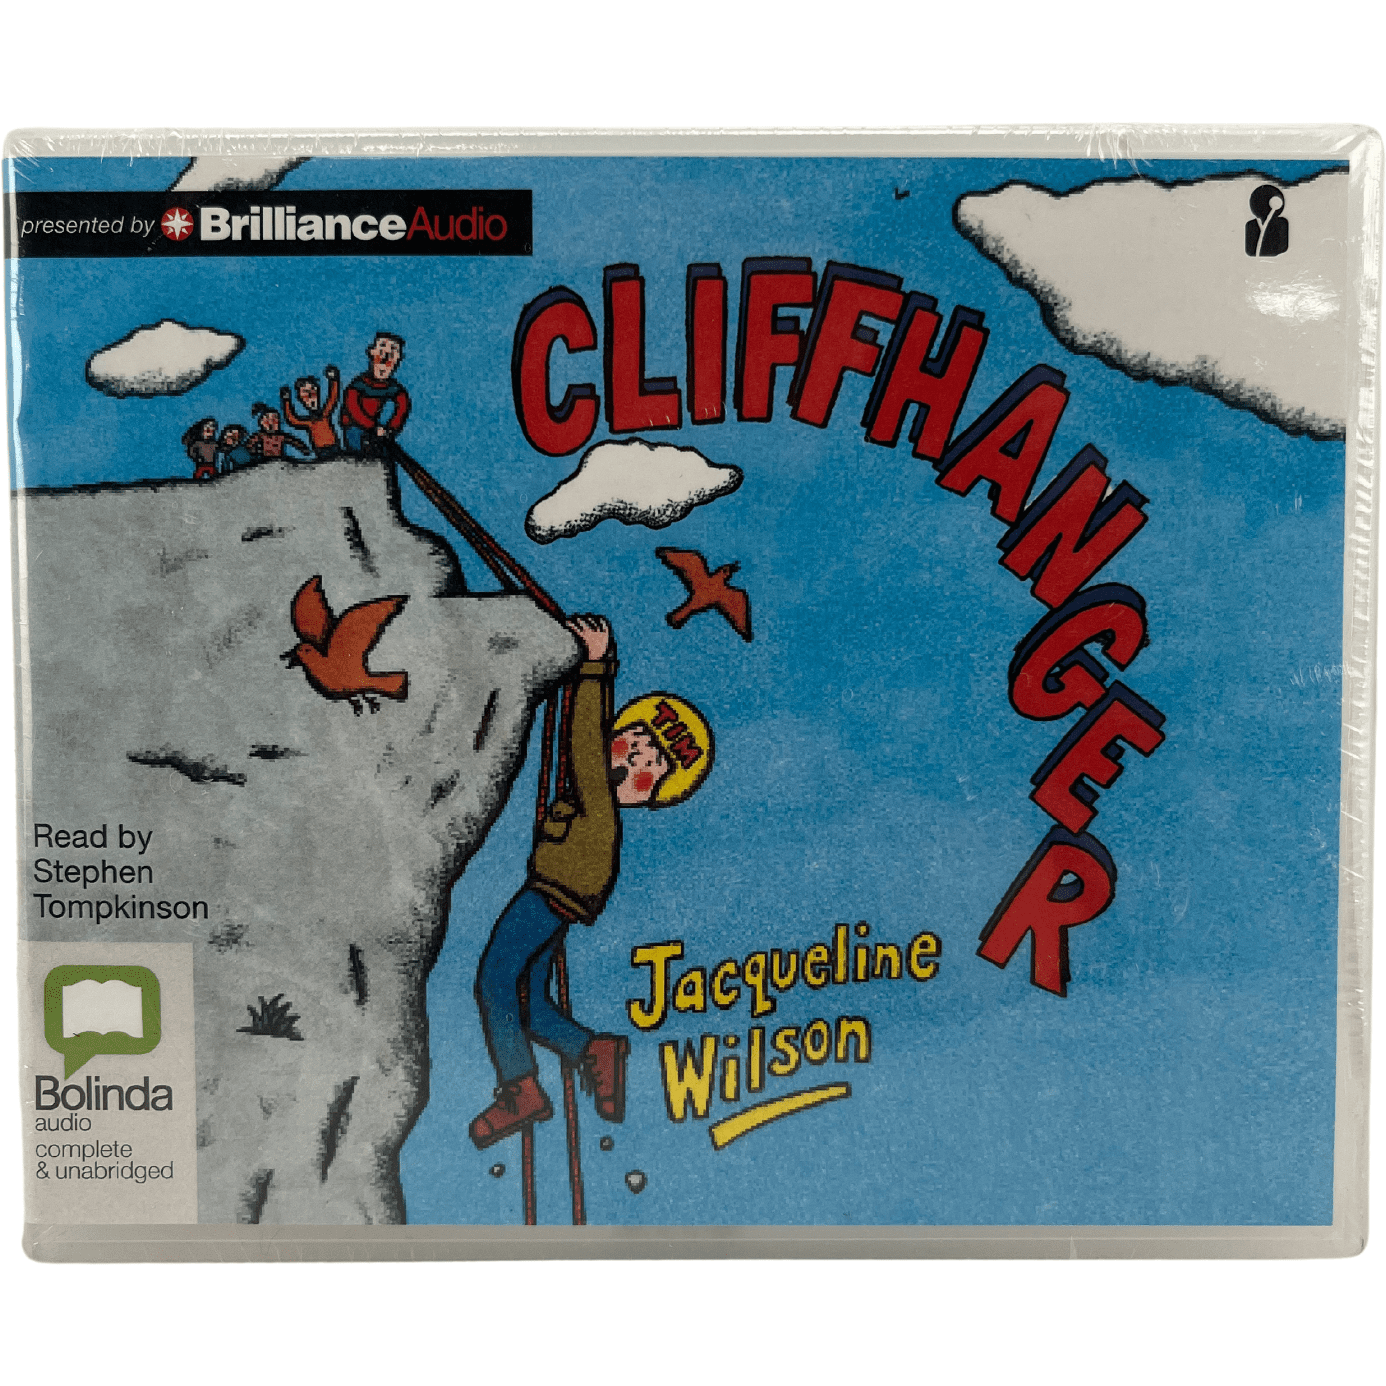 Audiobook "Cliffhanger" / Author Jacqueline Wilson / CD